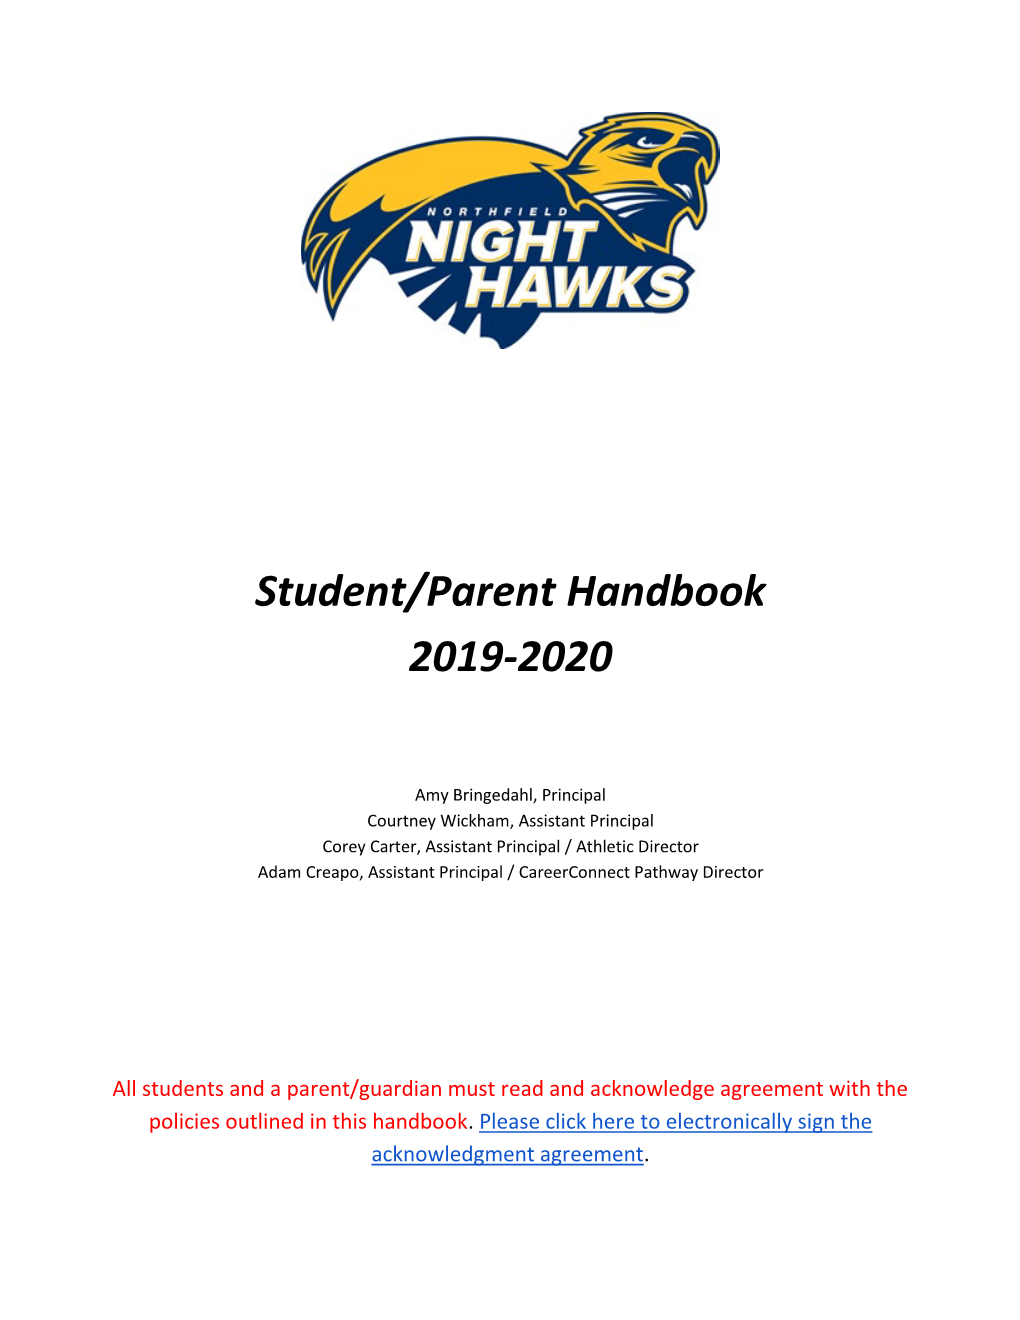 Student/Parent Handbook 2019-2020